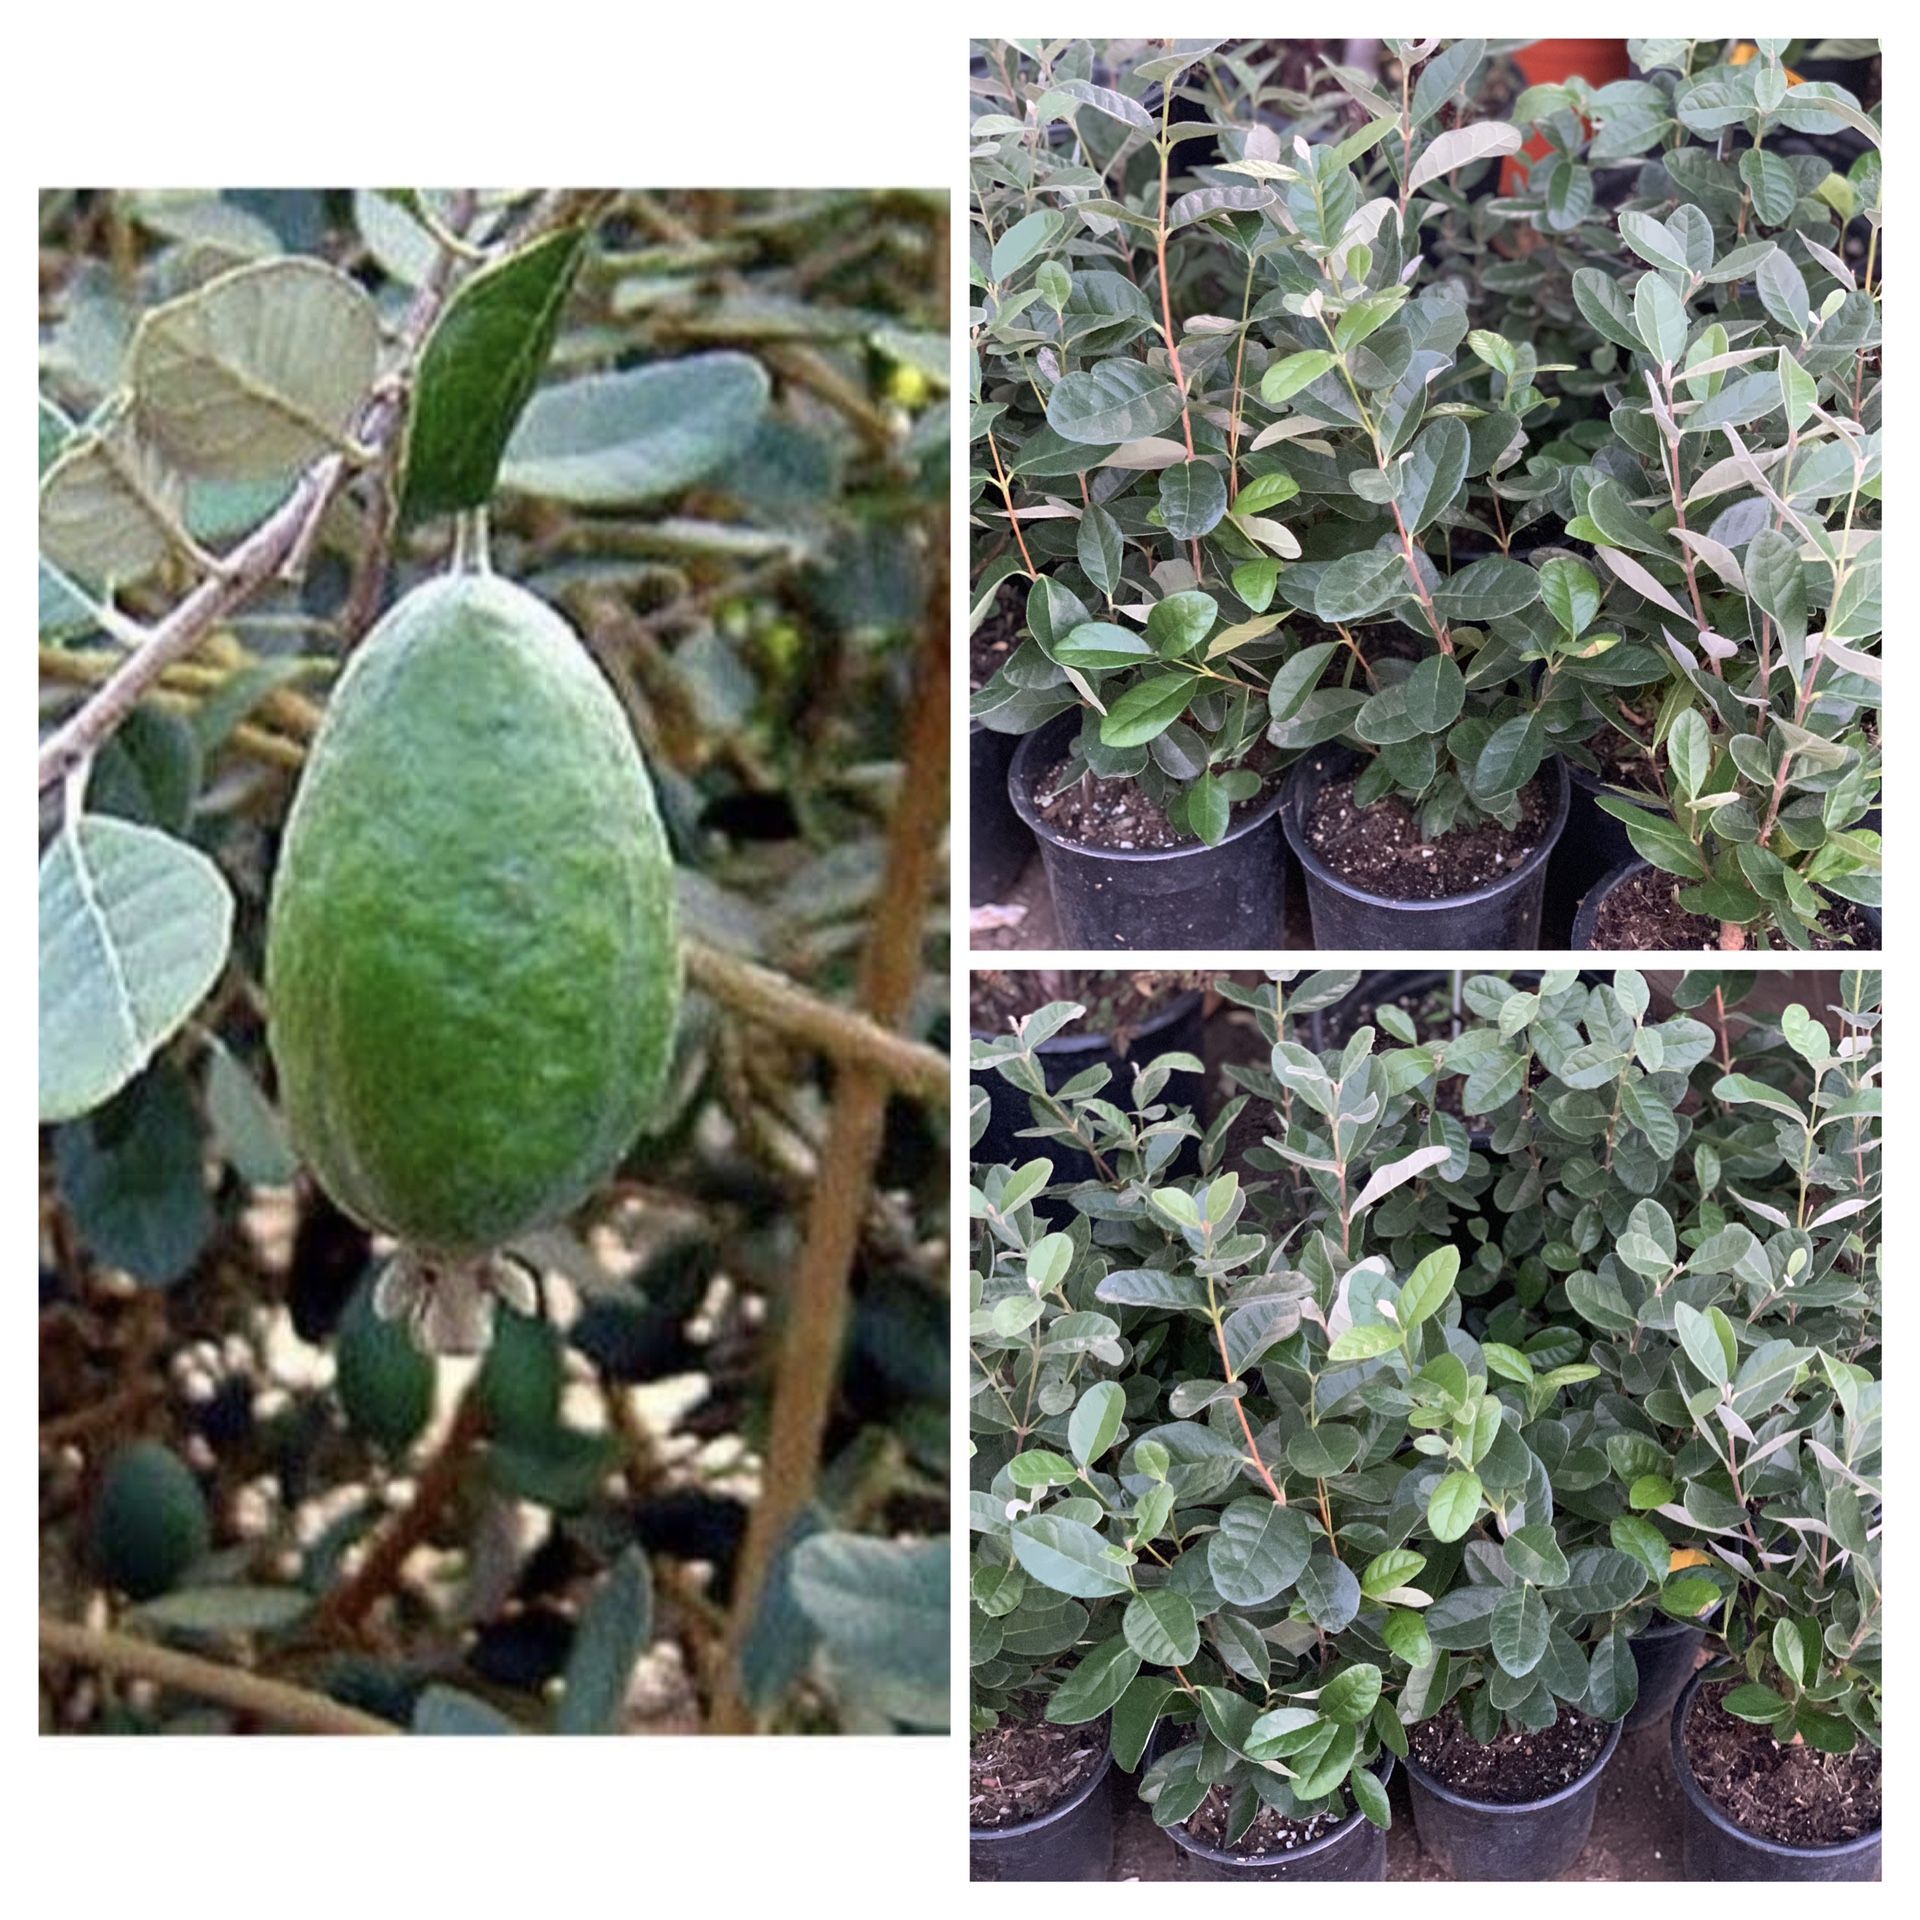 $25 Feijoa Sellowiana Pineapple Guava Live Fruit Tree Plant Bush Shrub One Gallon Pot approximately 1 to 2 ft tall